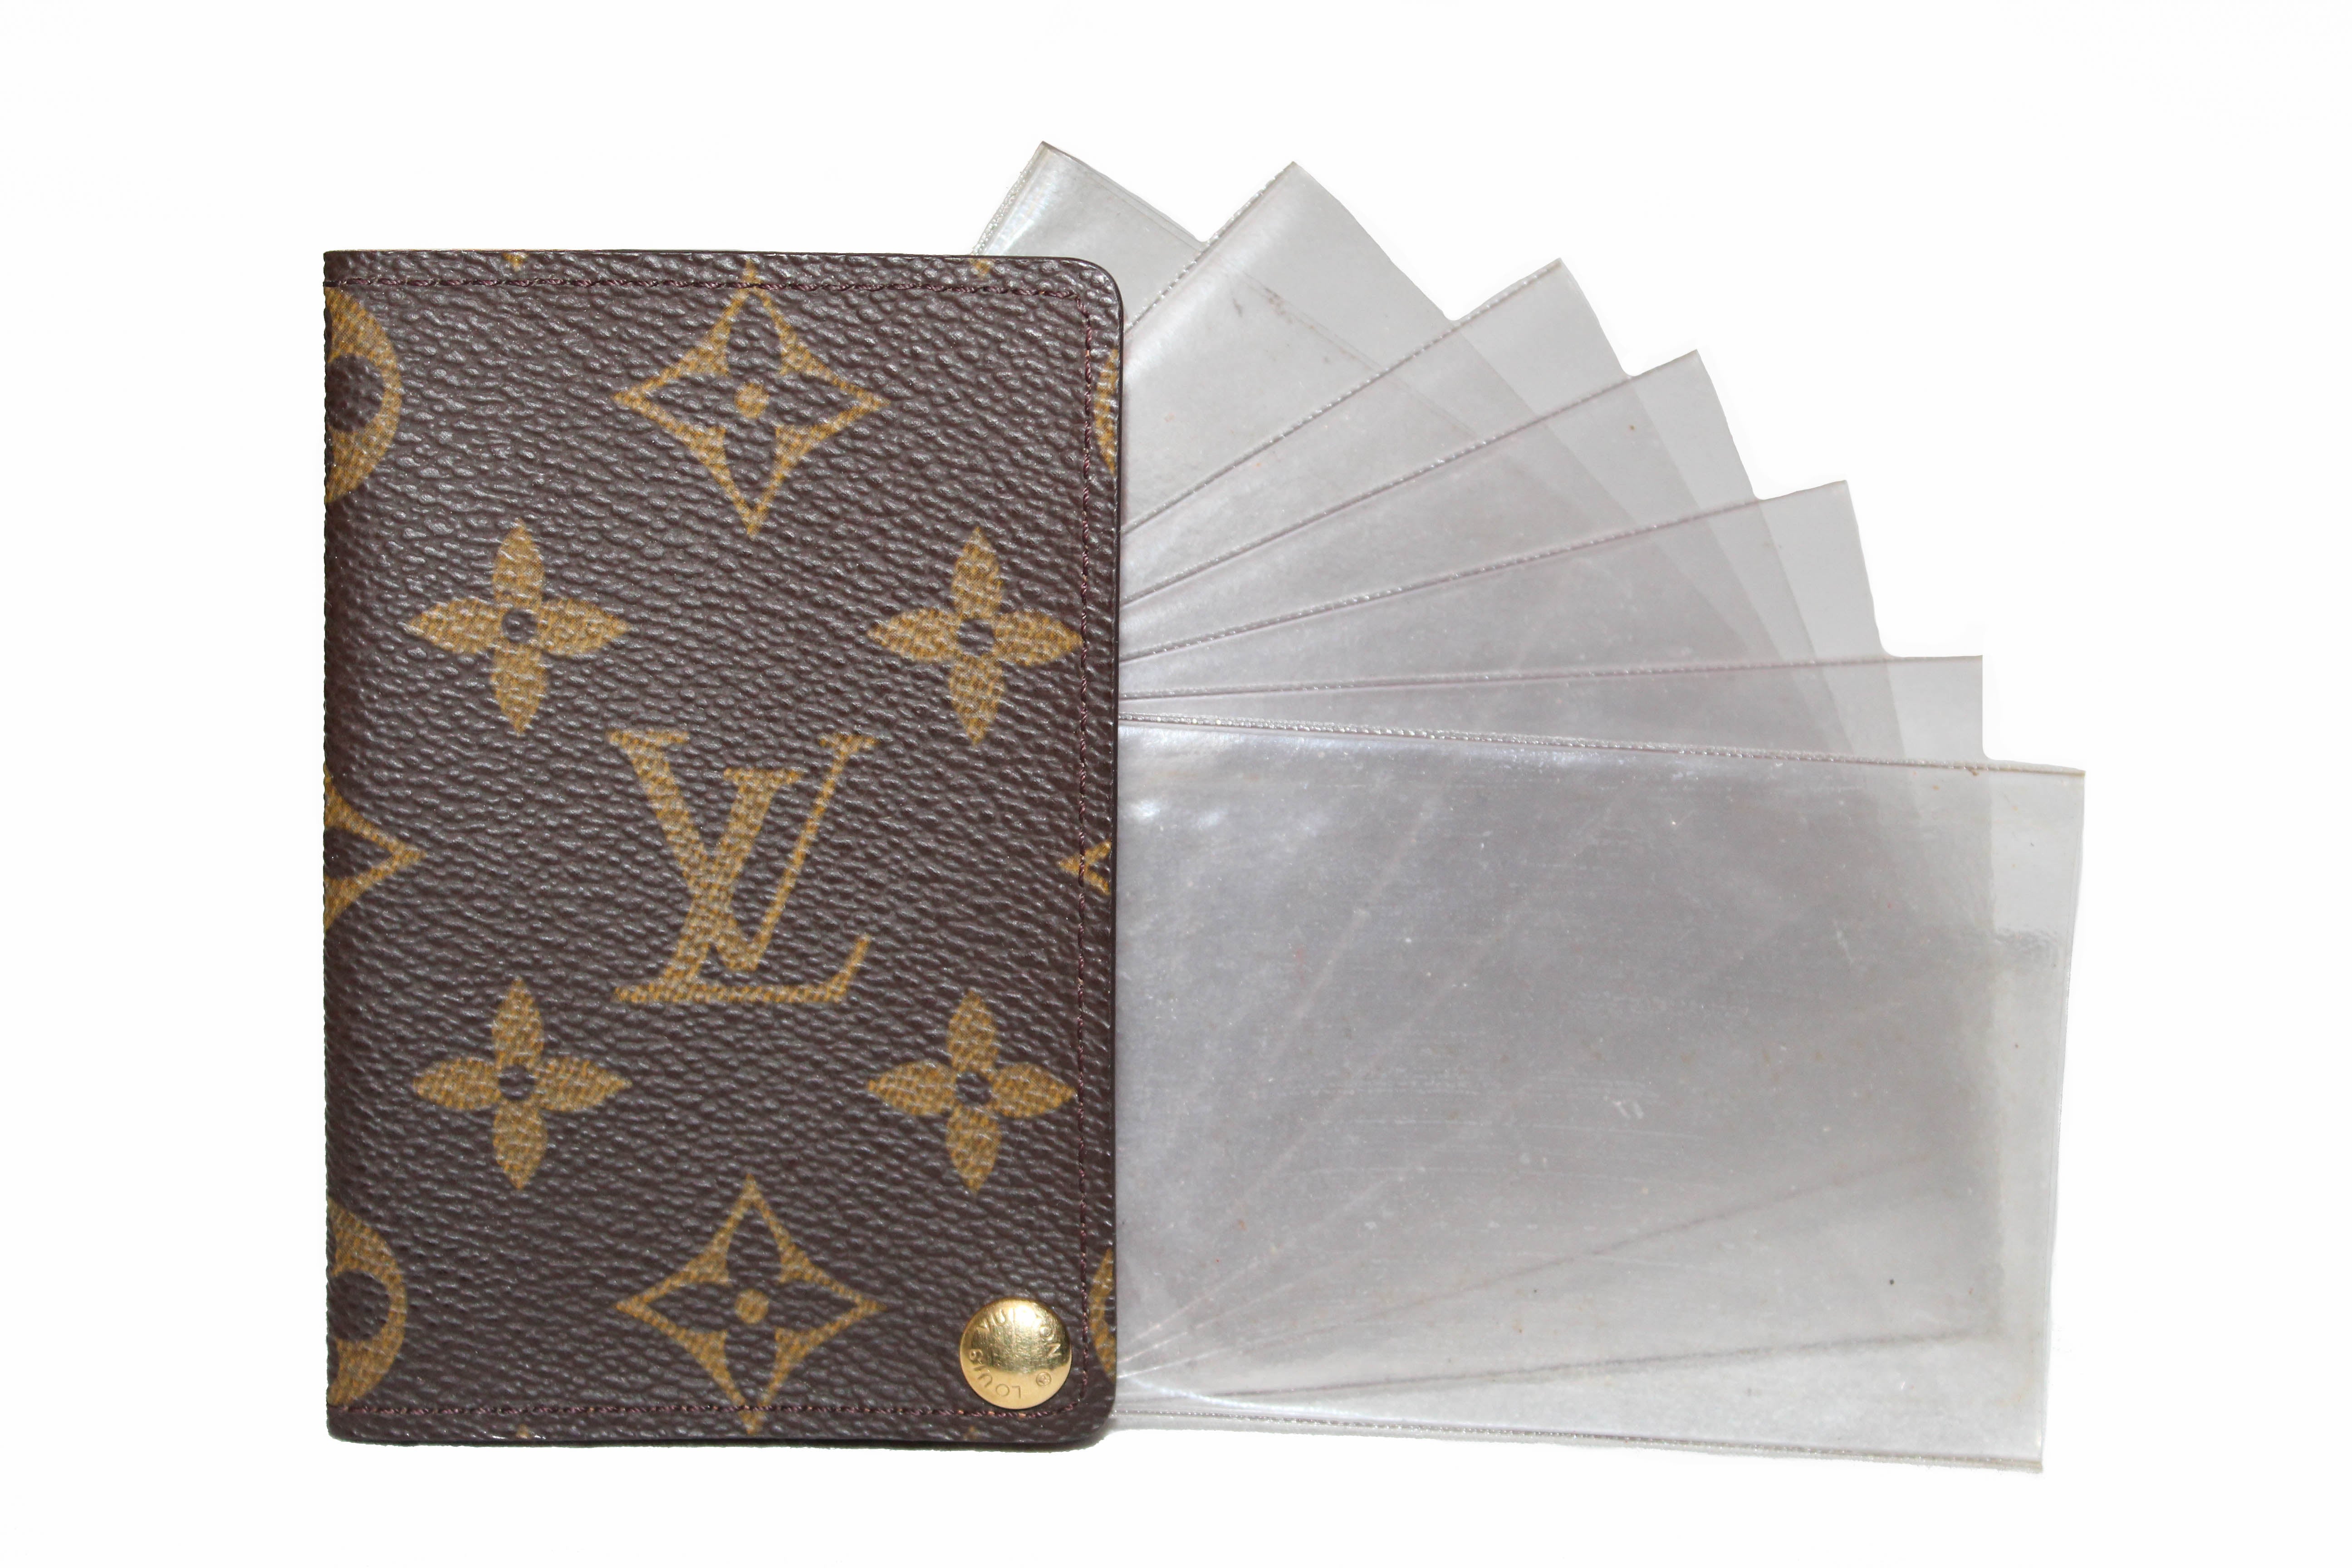 Authentic Louis Vuitton Monogram Credit Card Photo/Card Holder